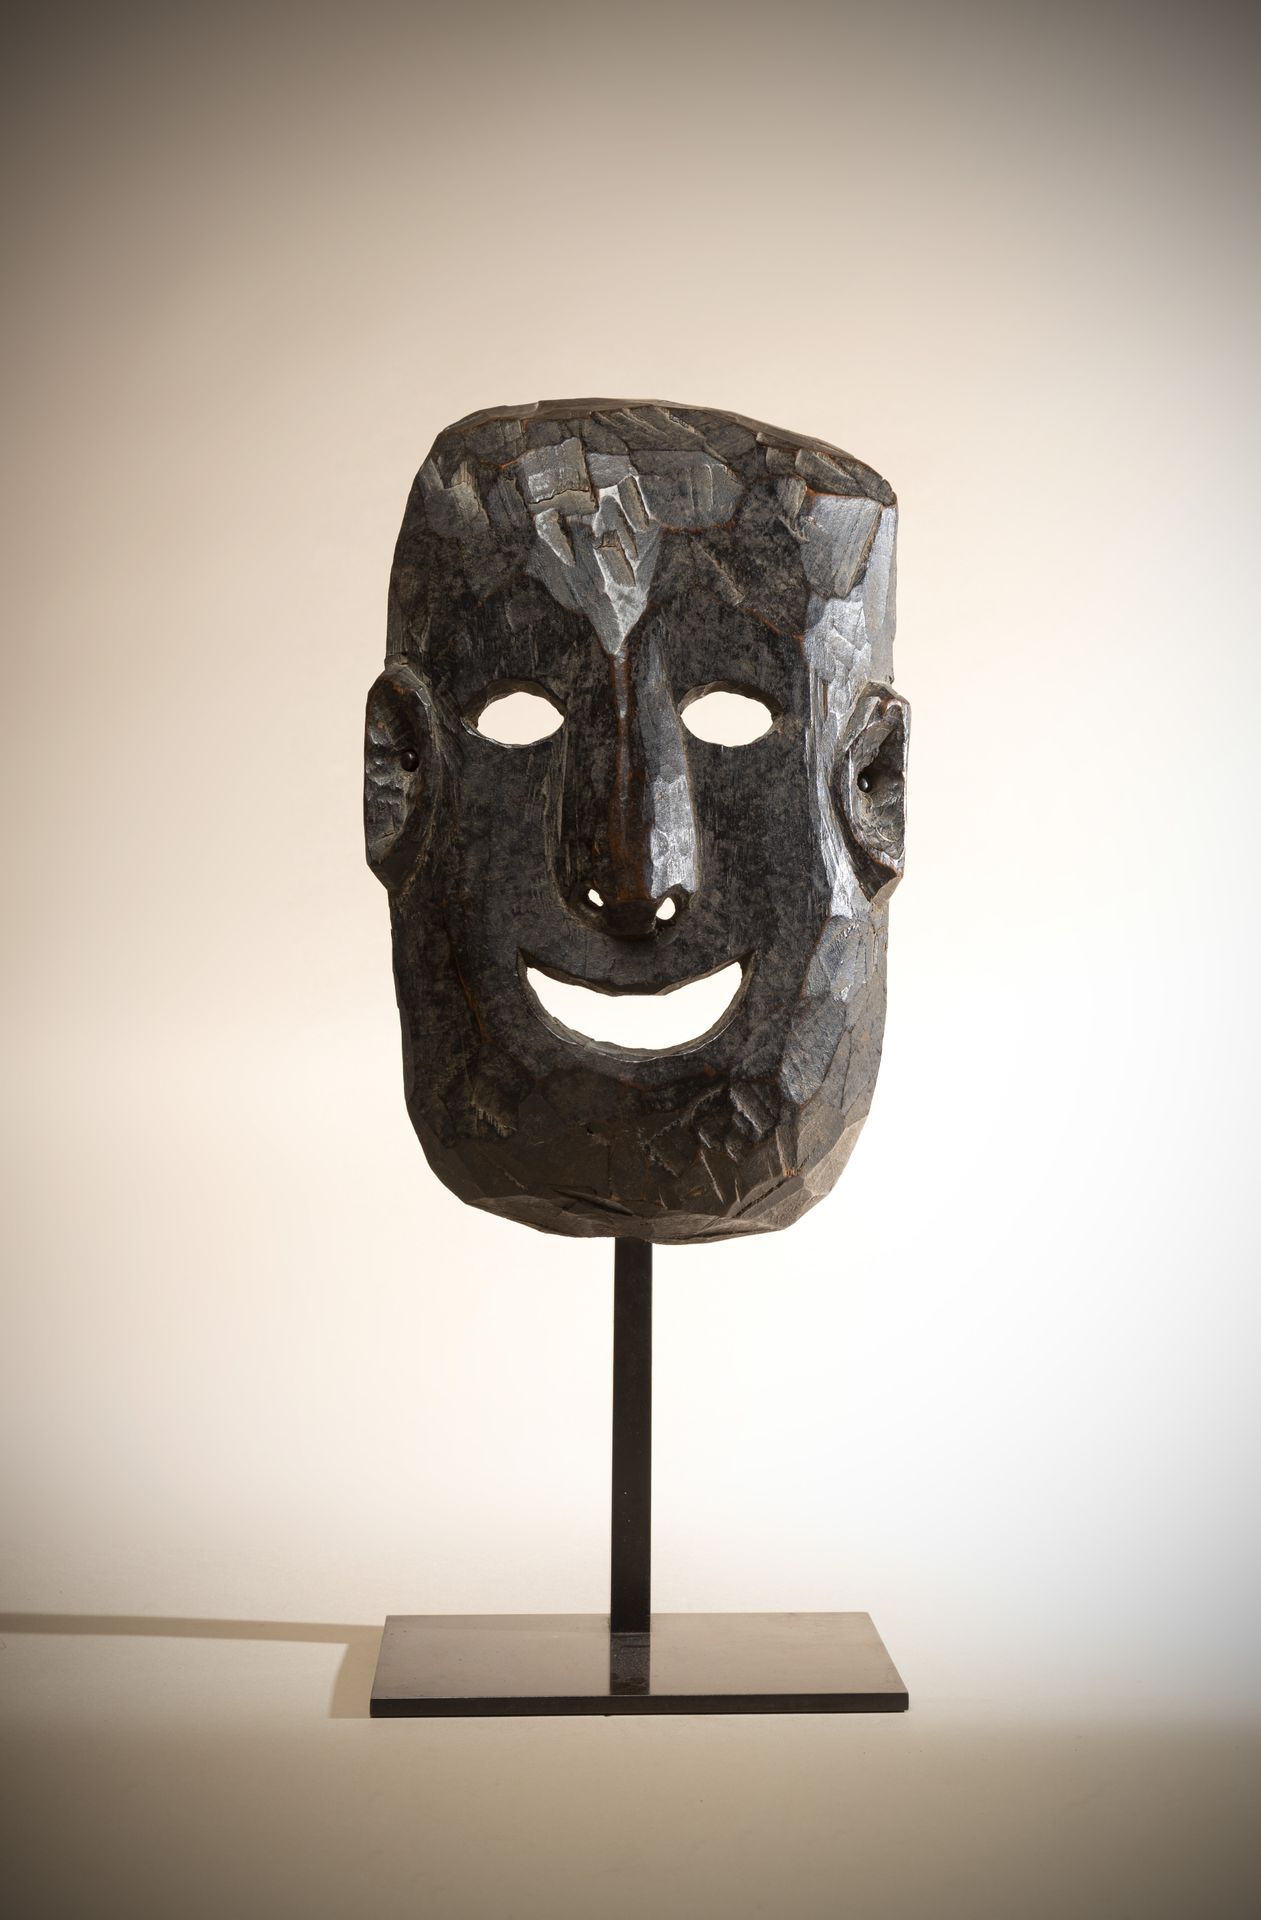 Null NEPAL

拟人化的面具，具有美丽的漆面光泽。

青铜底座EB

收藏E和G Betra

高度：30厘米